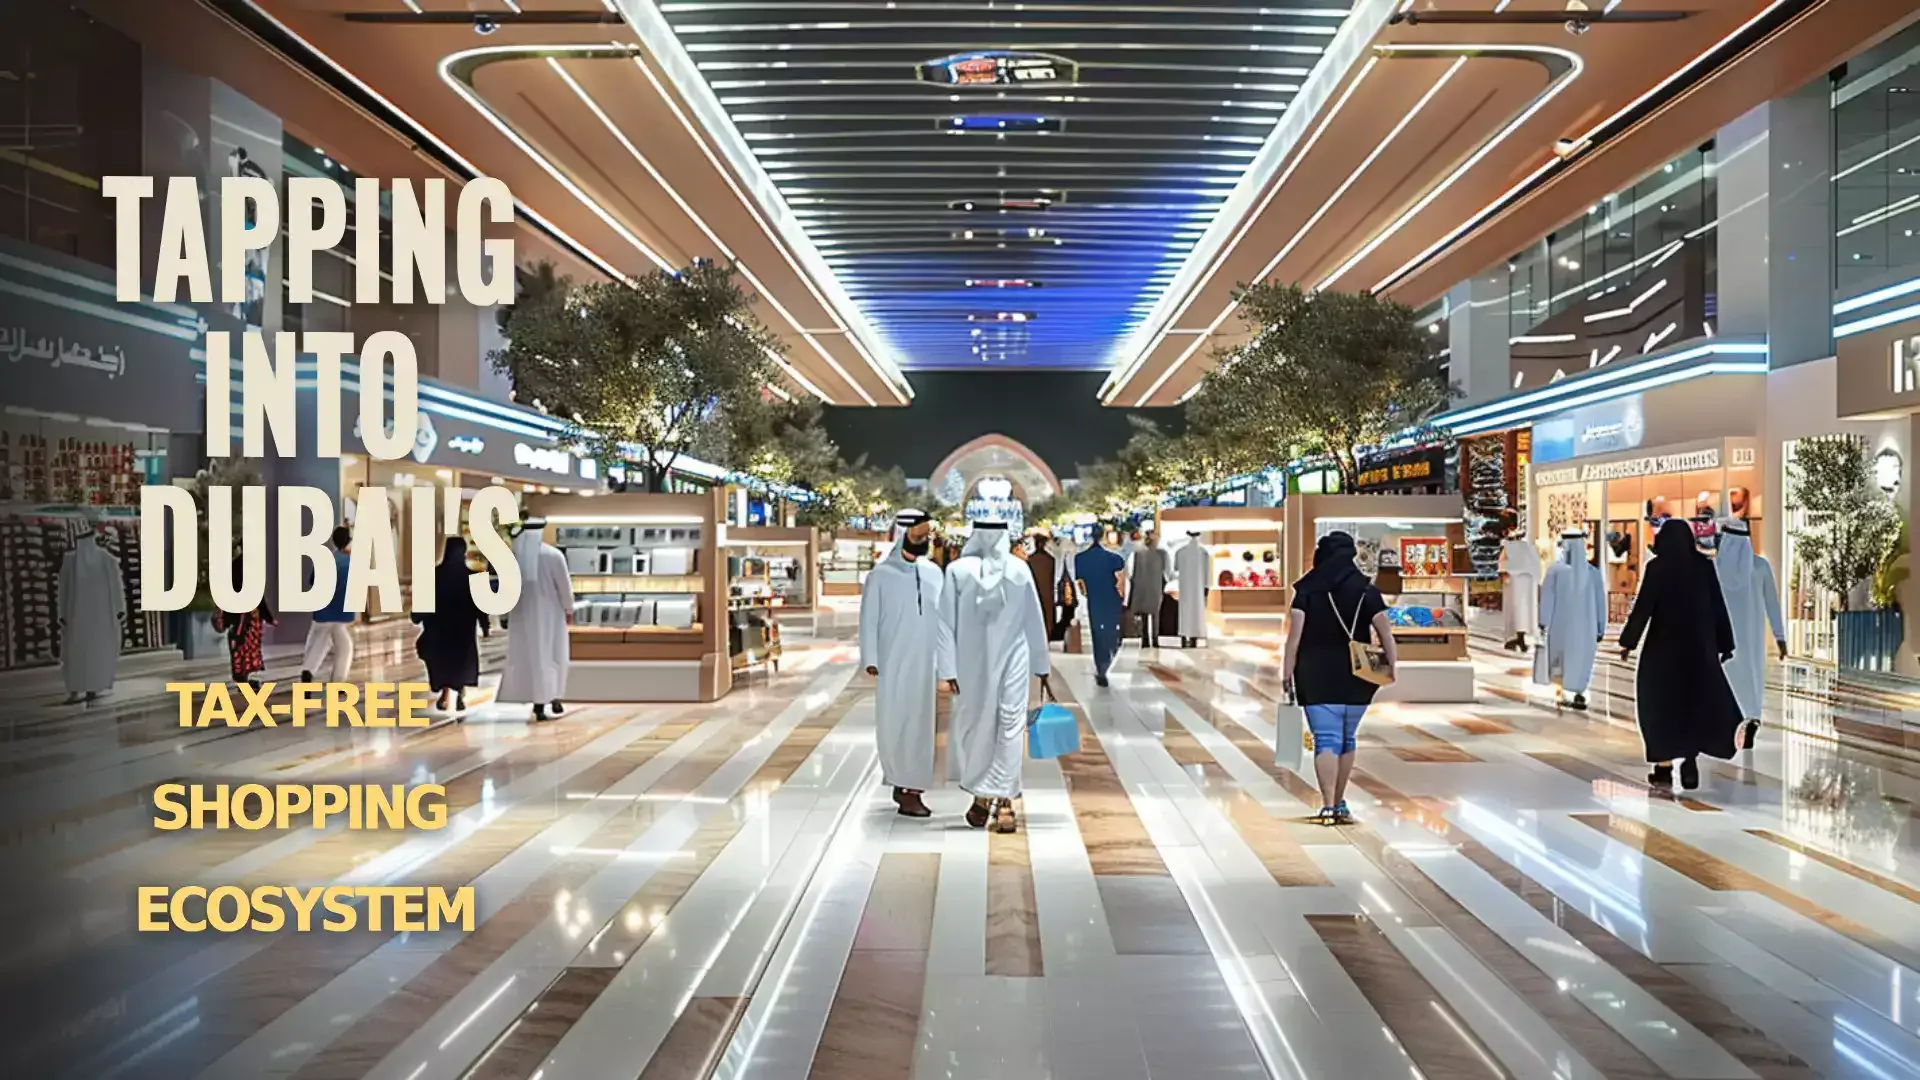 Experience the allure of Dubai's shopping scene